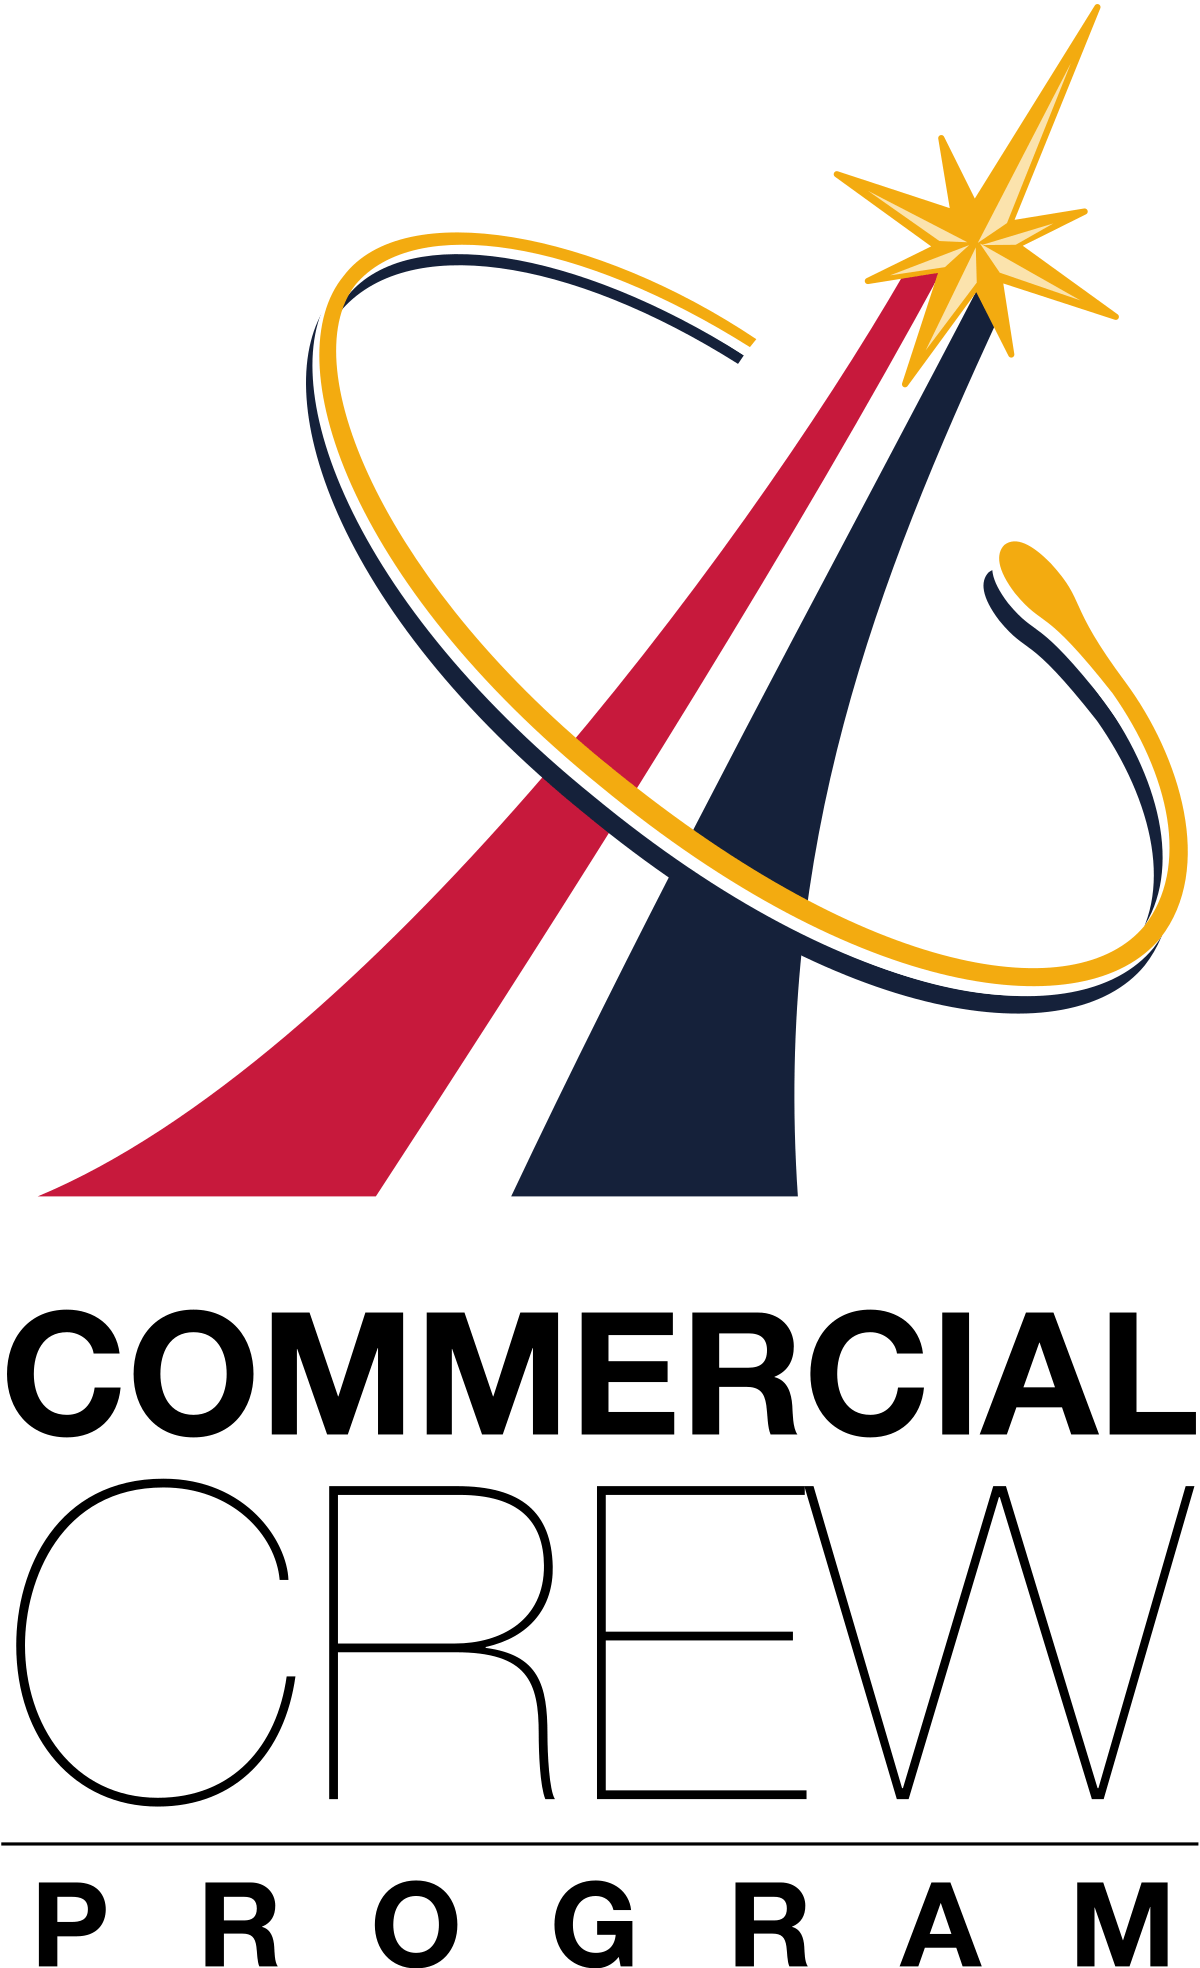 Cots NASA Logo - Commercial Crew Development